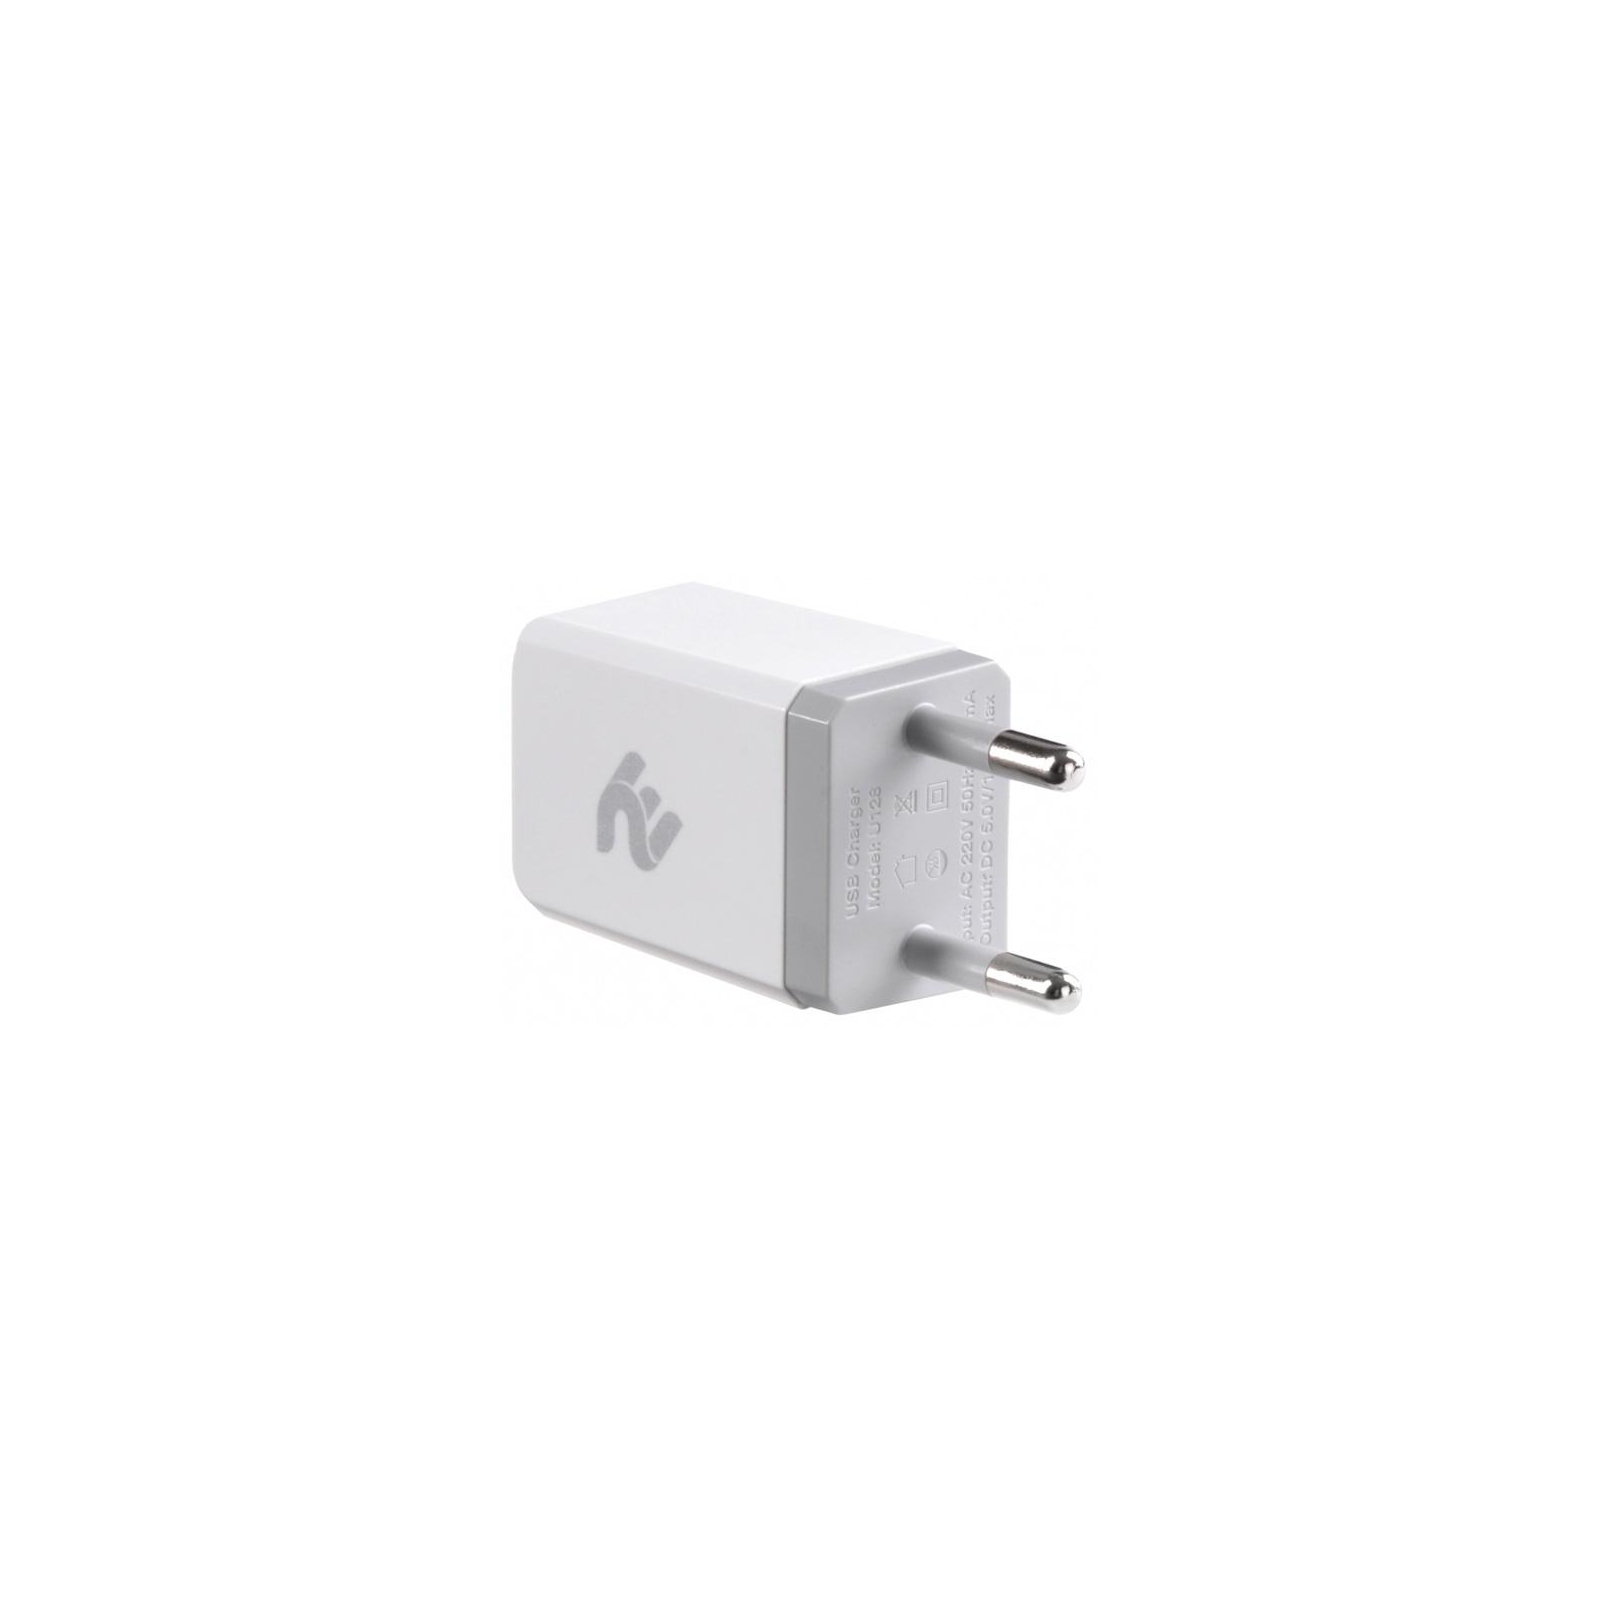 Зарядний пристрій 2E USB Wall Charger USB:DC5V/1A, white (2E-WC1USB1A-W) зображення 2